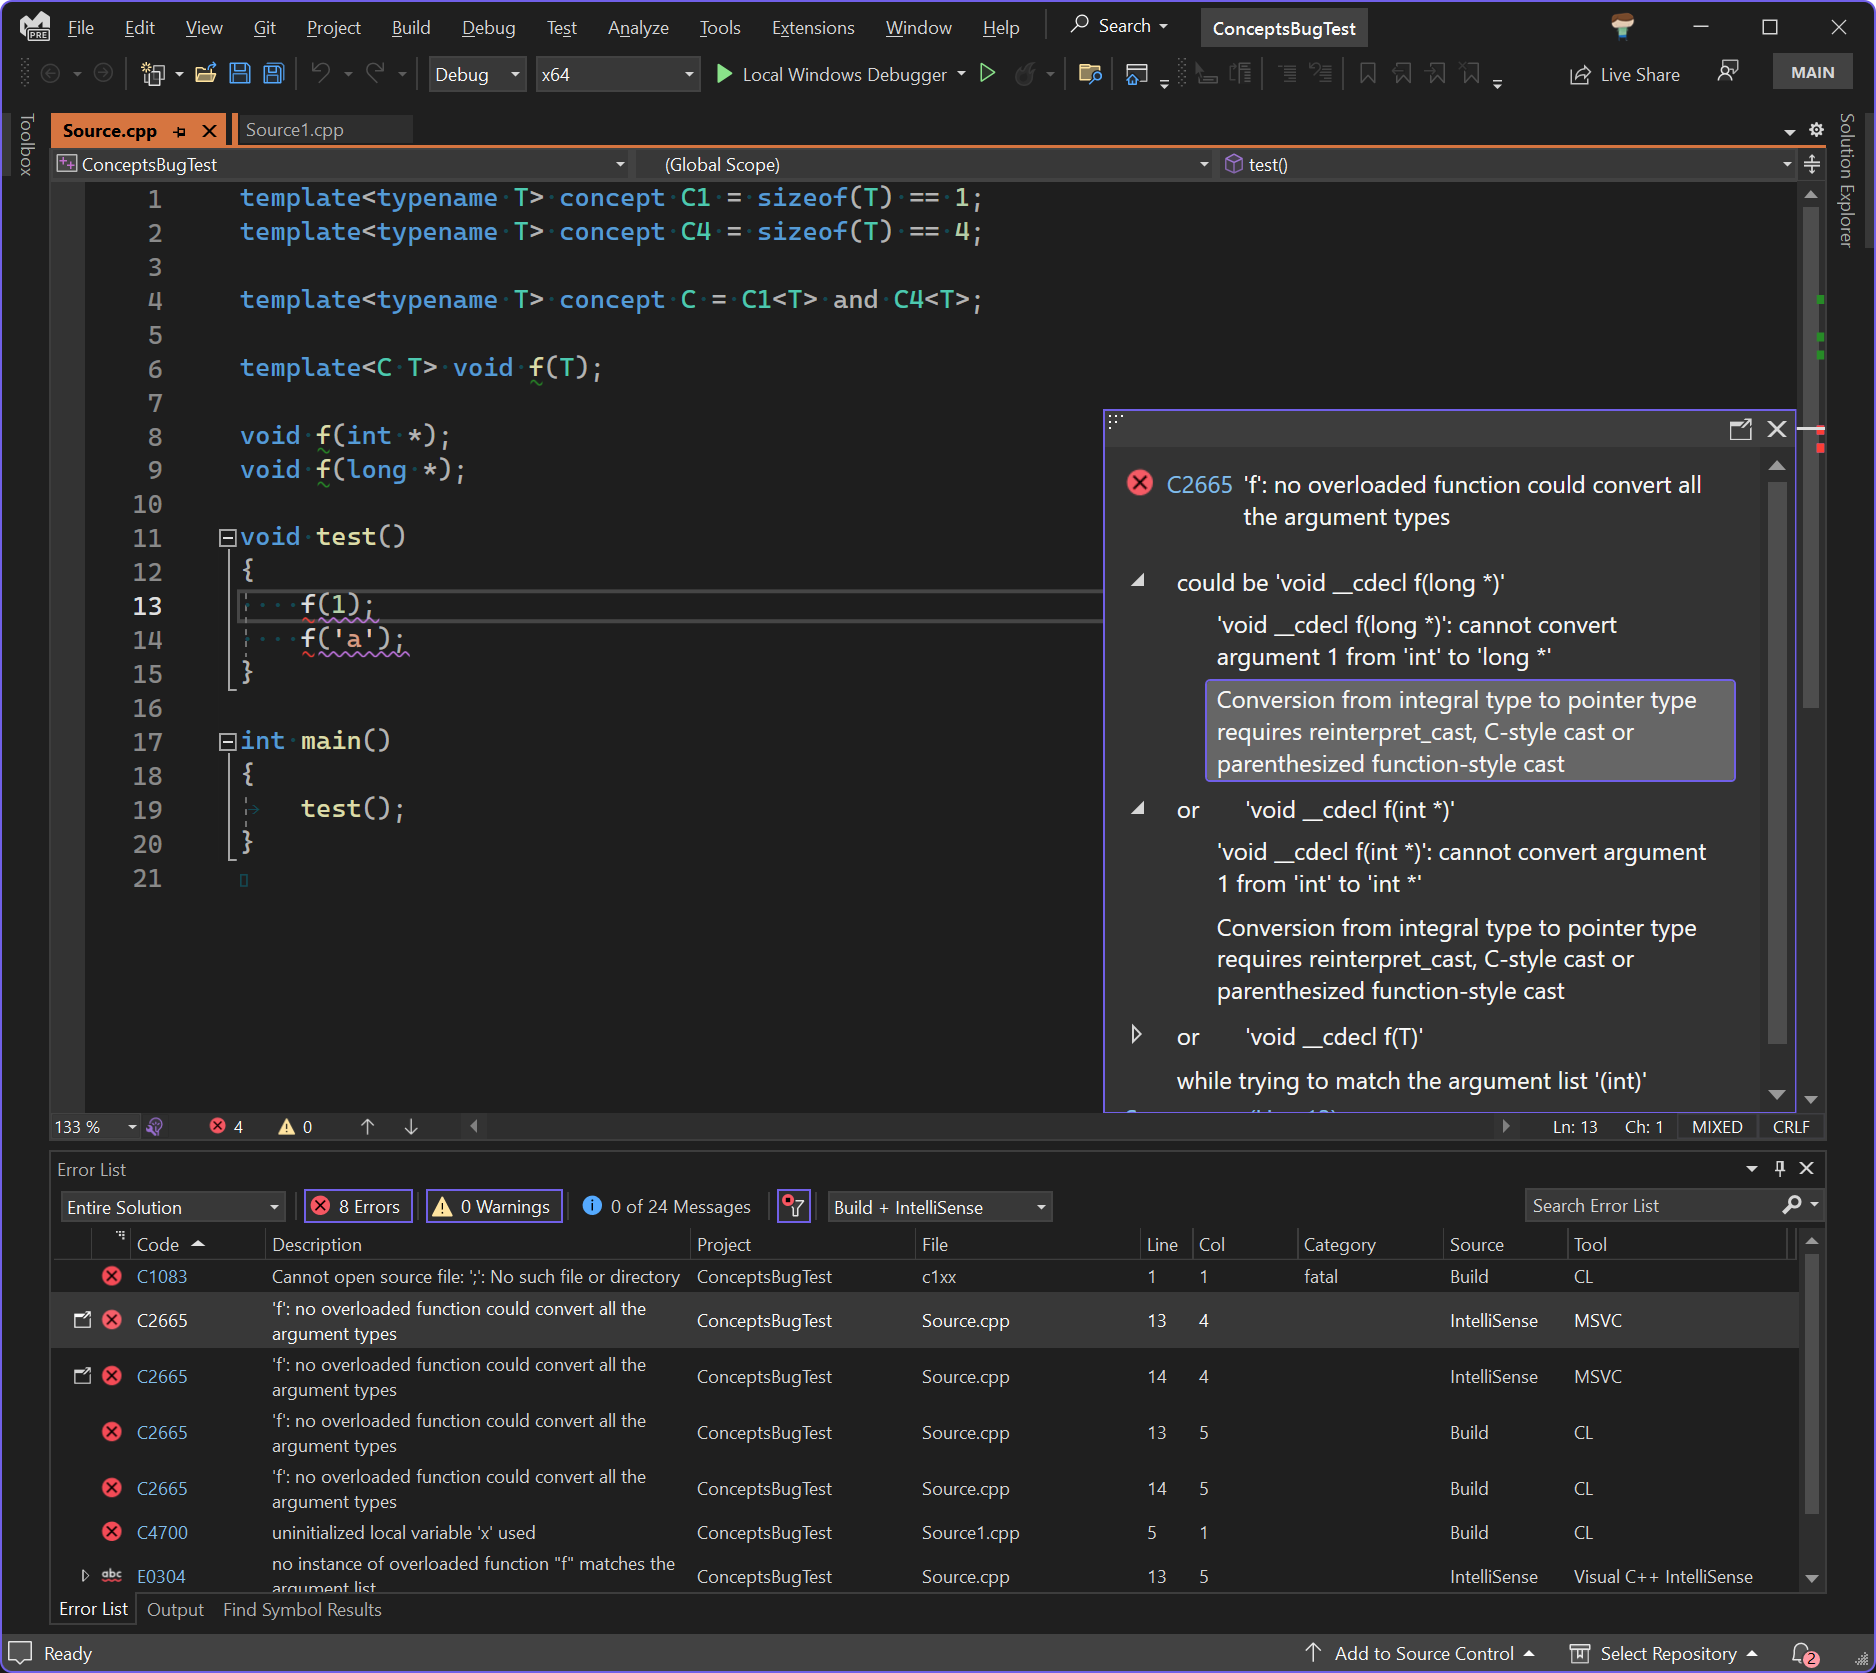 A screenshot of Visual Studio 2015 displaying an error message.